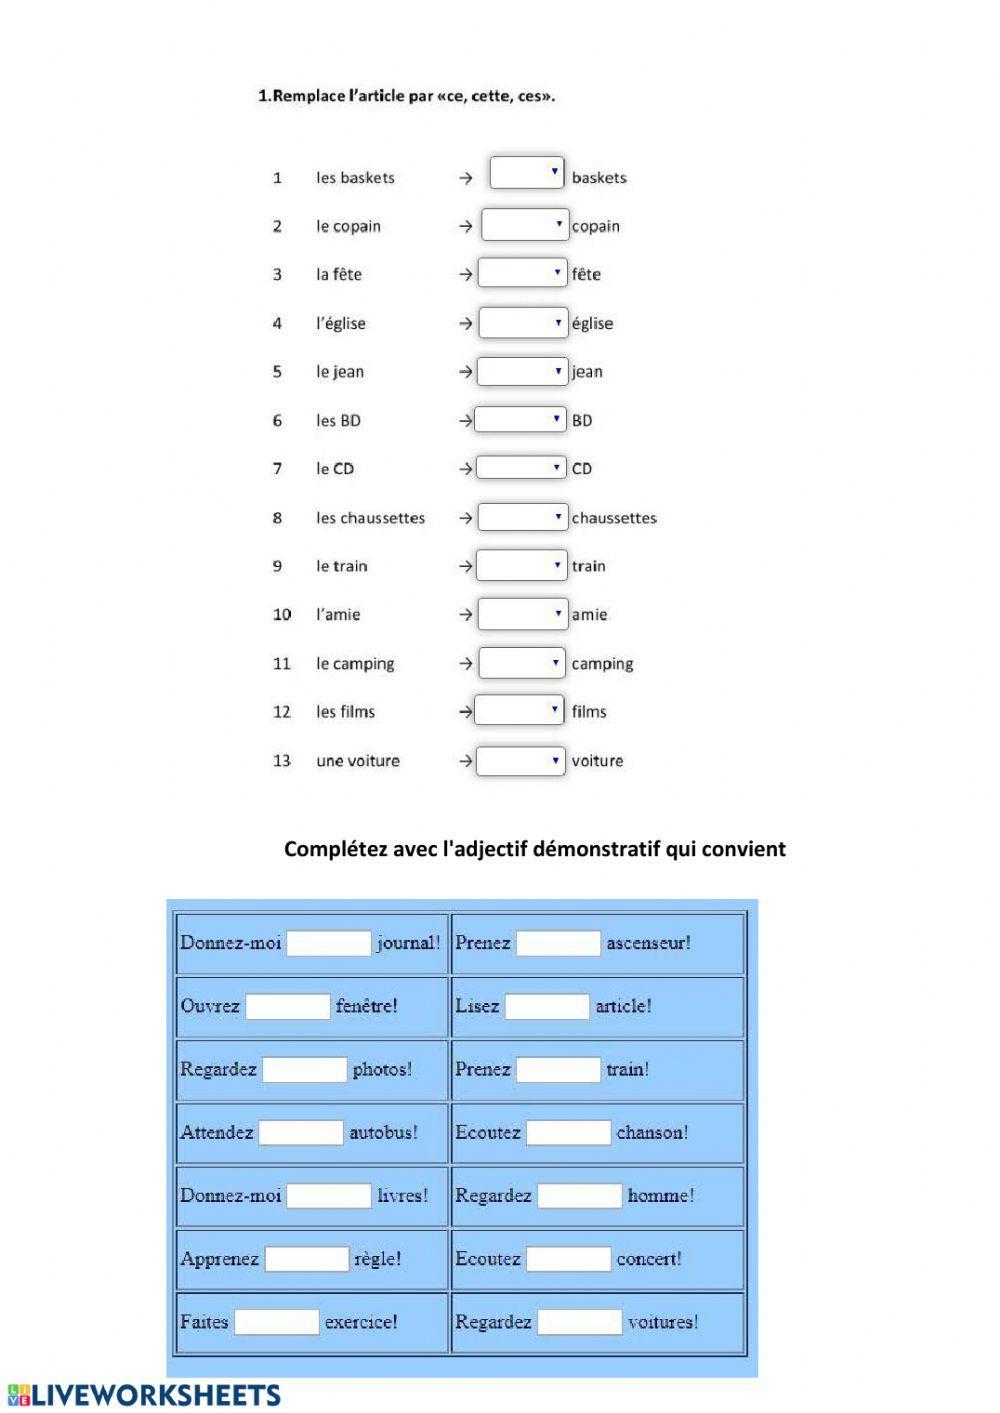 Adjectifs demonstratifs